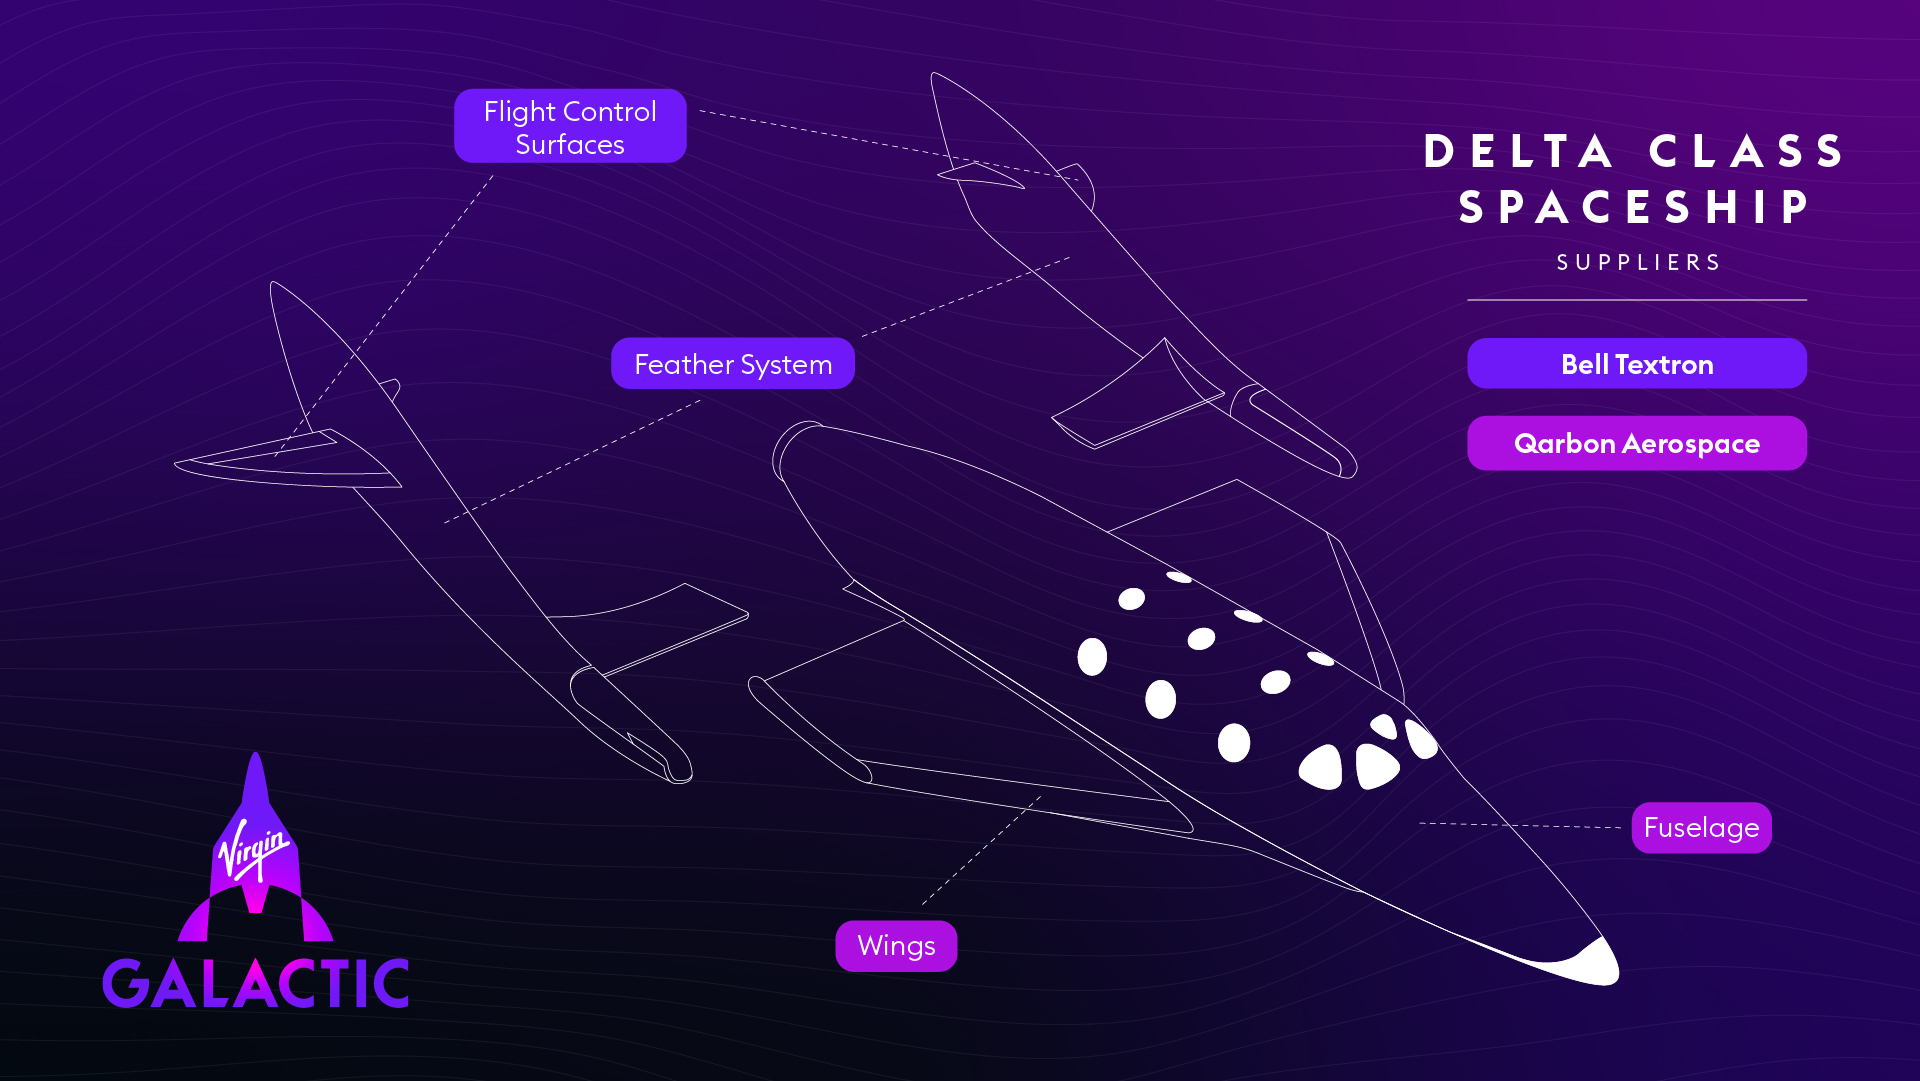 Virgin Galactic announces primary suppliers for Delta class spaceships |  CompositesWorld